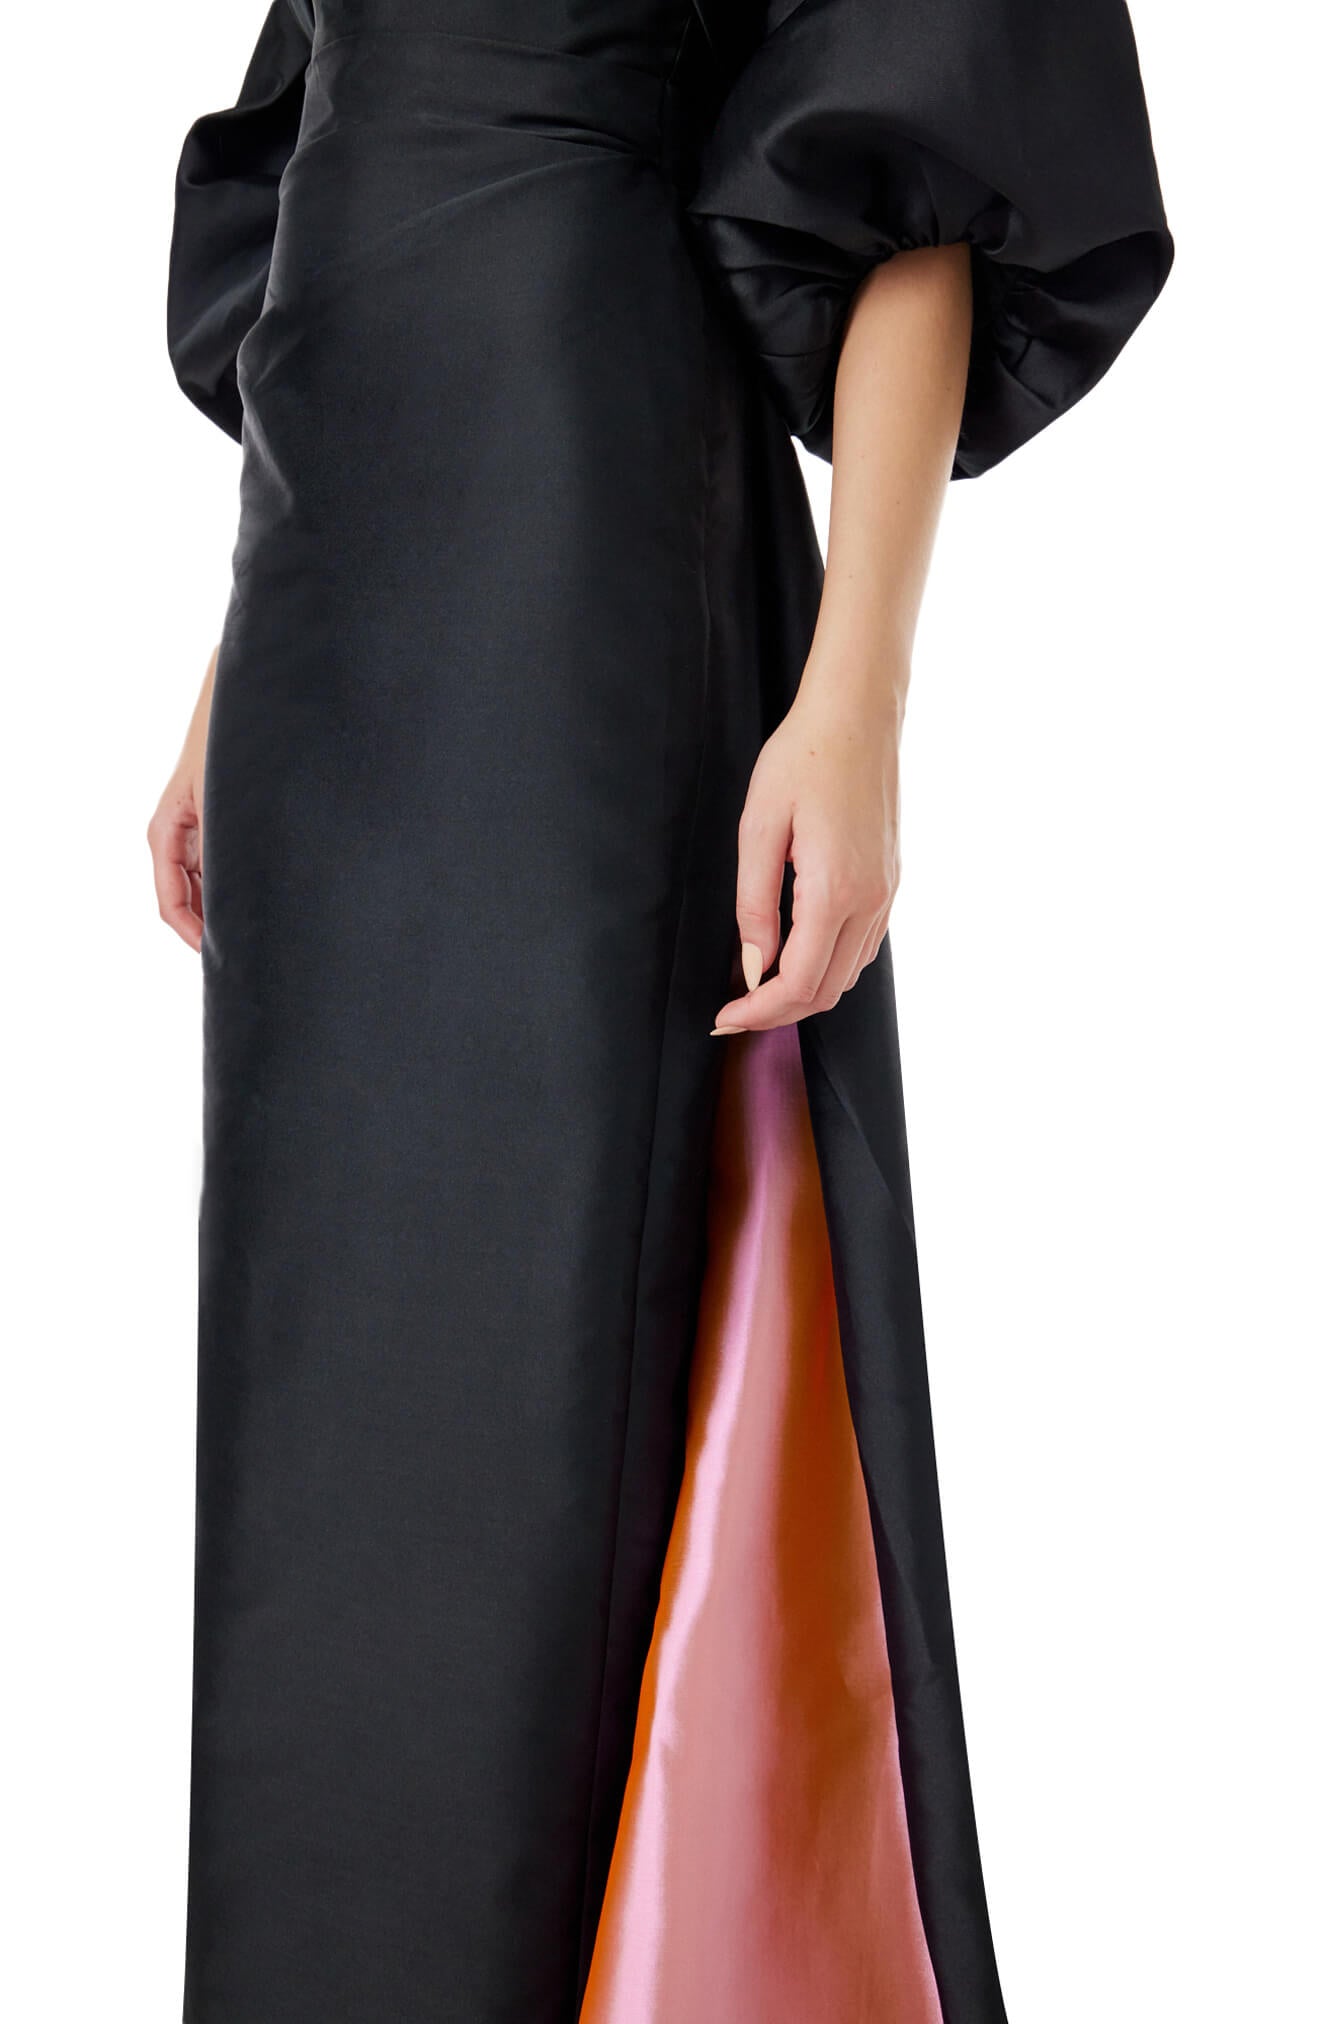 Monique Lhuillier strapless column gown in black silk faille with pink bi-color train.